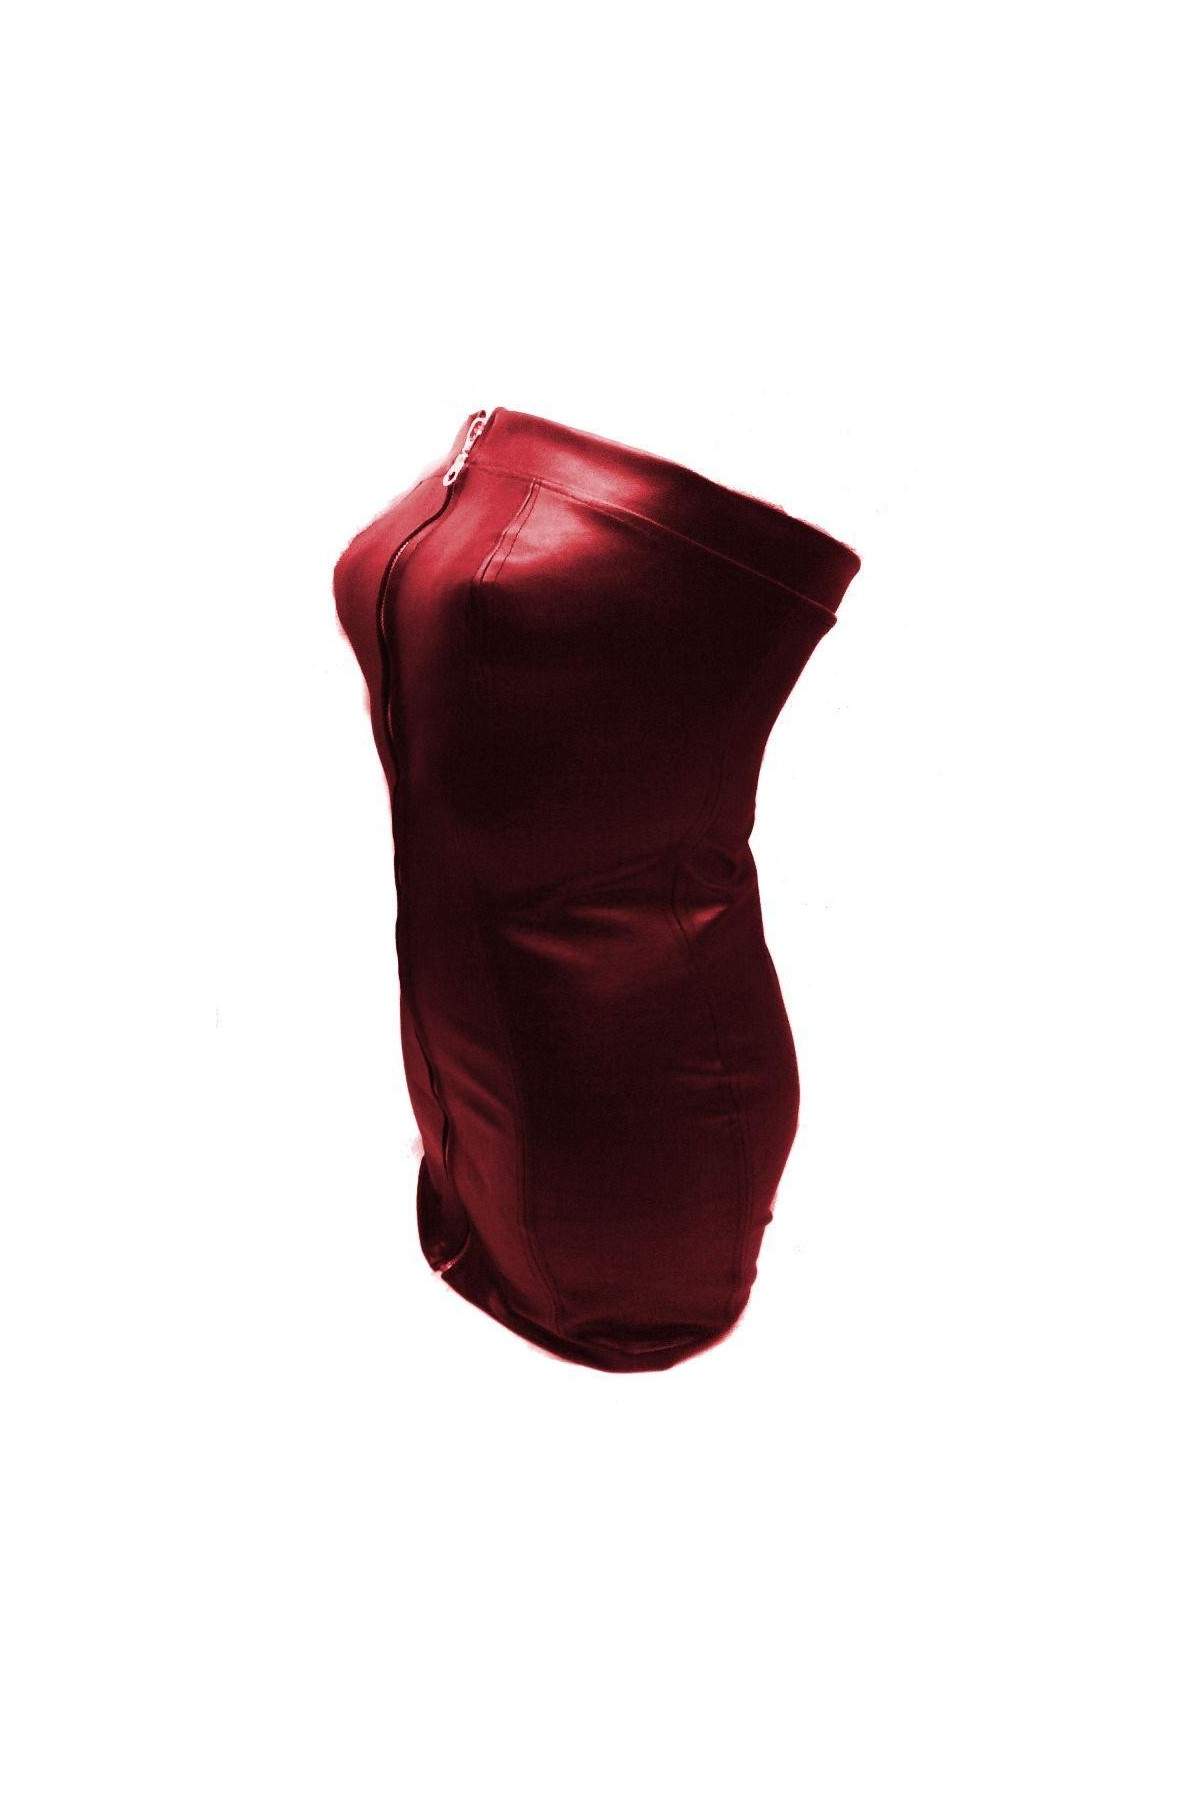 FGirth Softes Designer Leder Kleid rot Größe L - XXL (44 - 52) - 